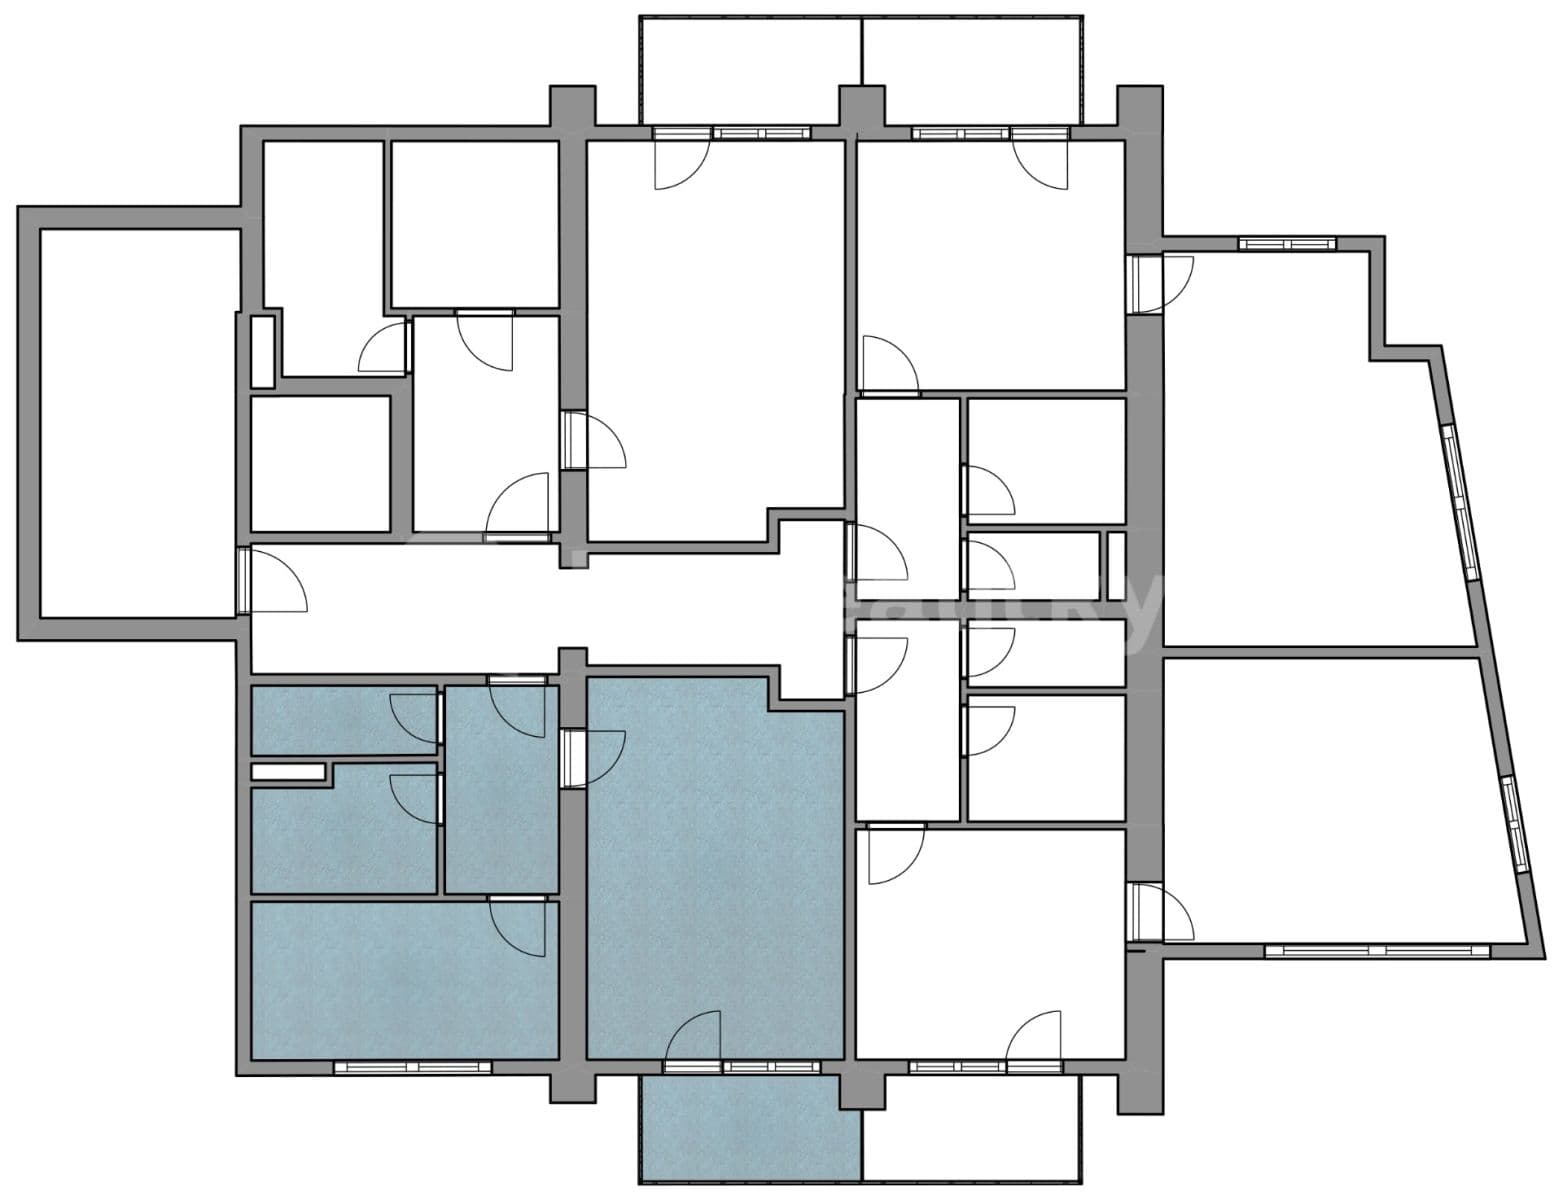 Predaj bytu 2-izbový 38 m², Mládí, Jablonec nad Nisou, Liberecký kraj